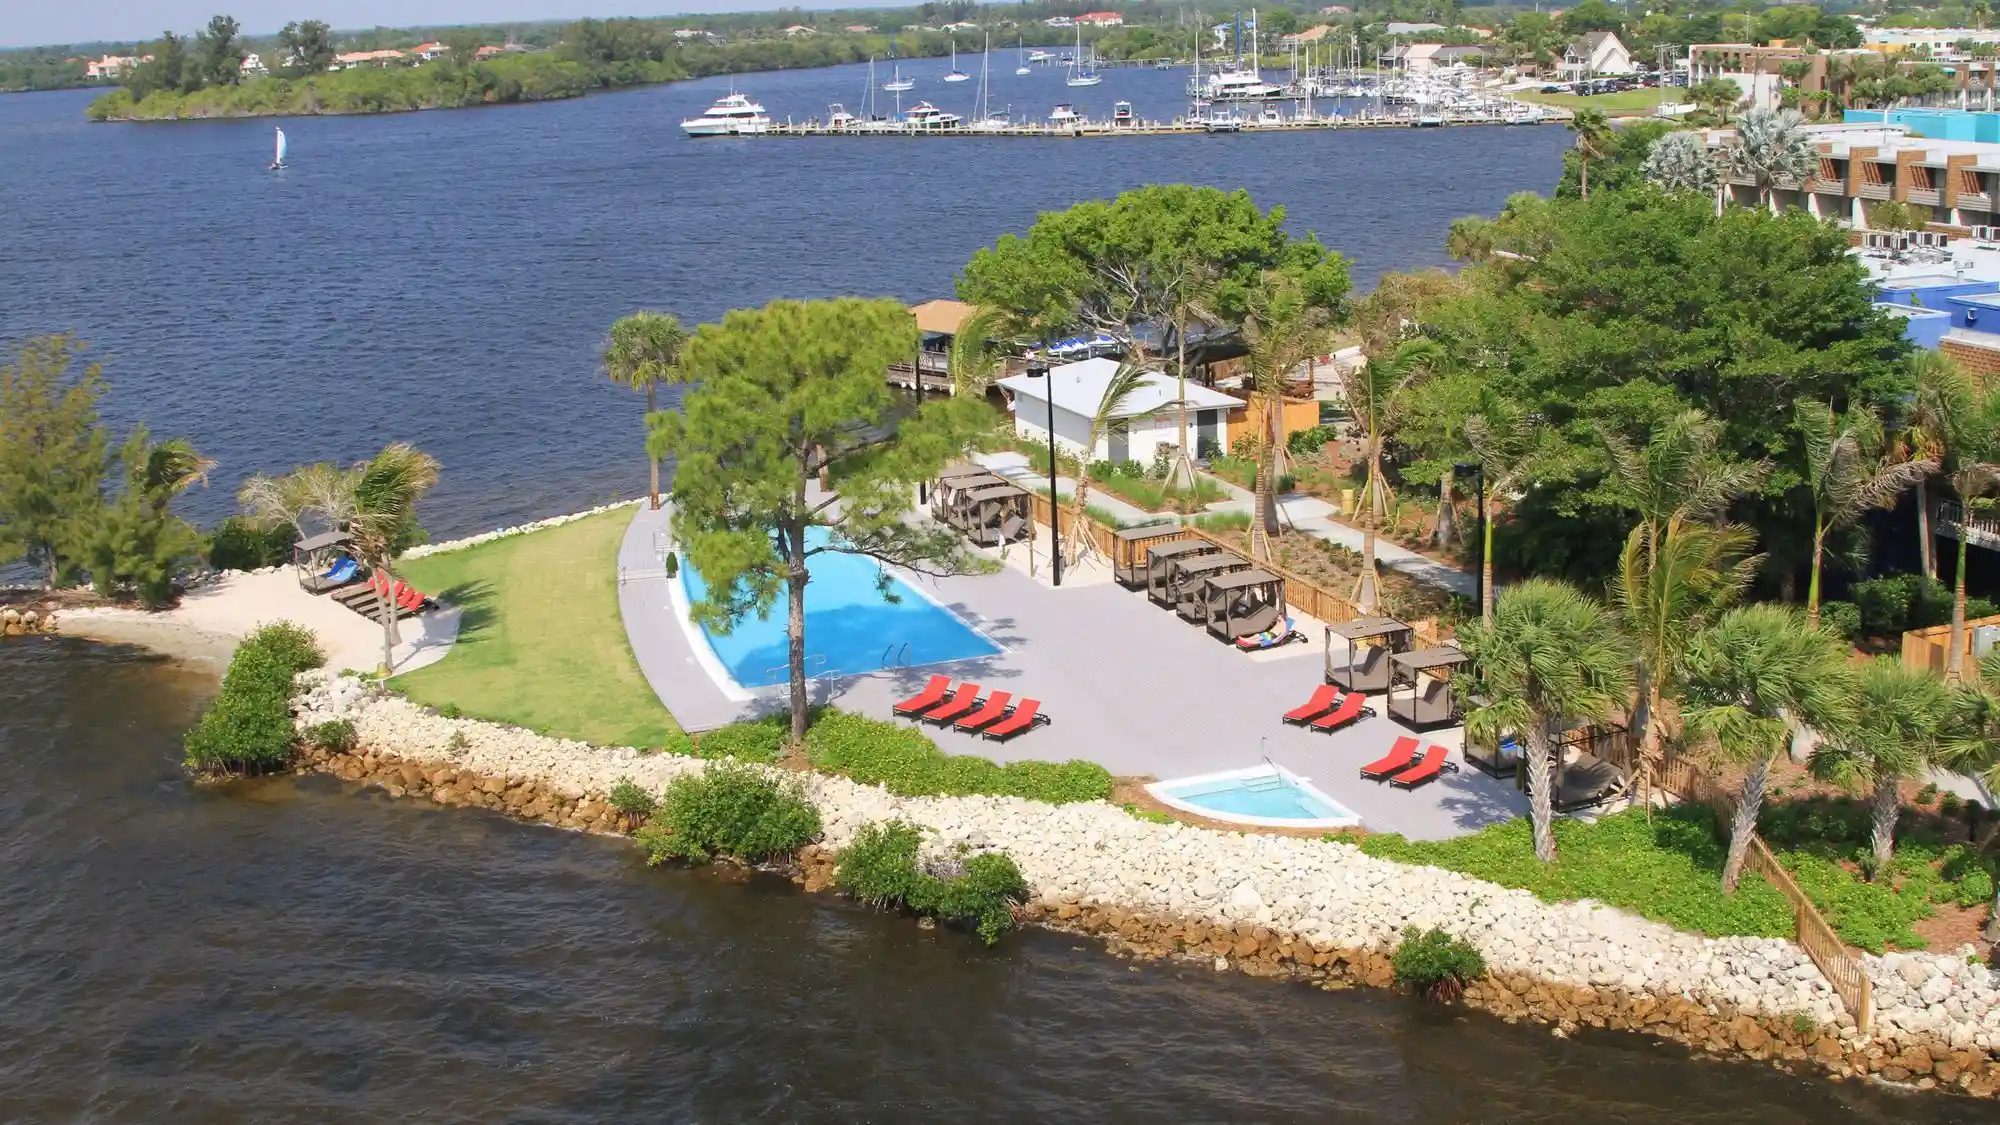 Club Med Sandpiper Bay In Port St. Lucie, Florida